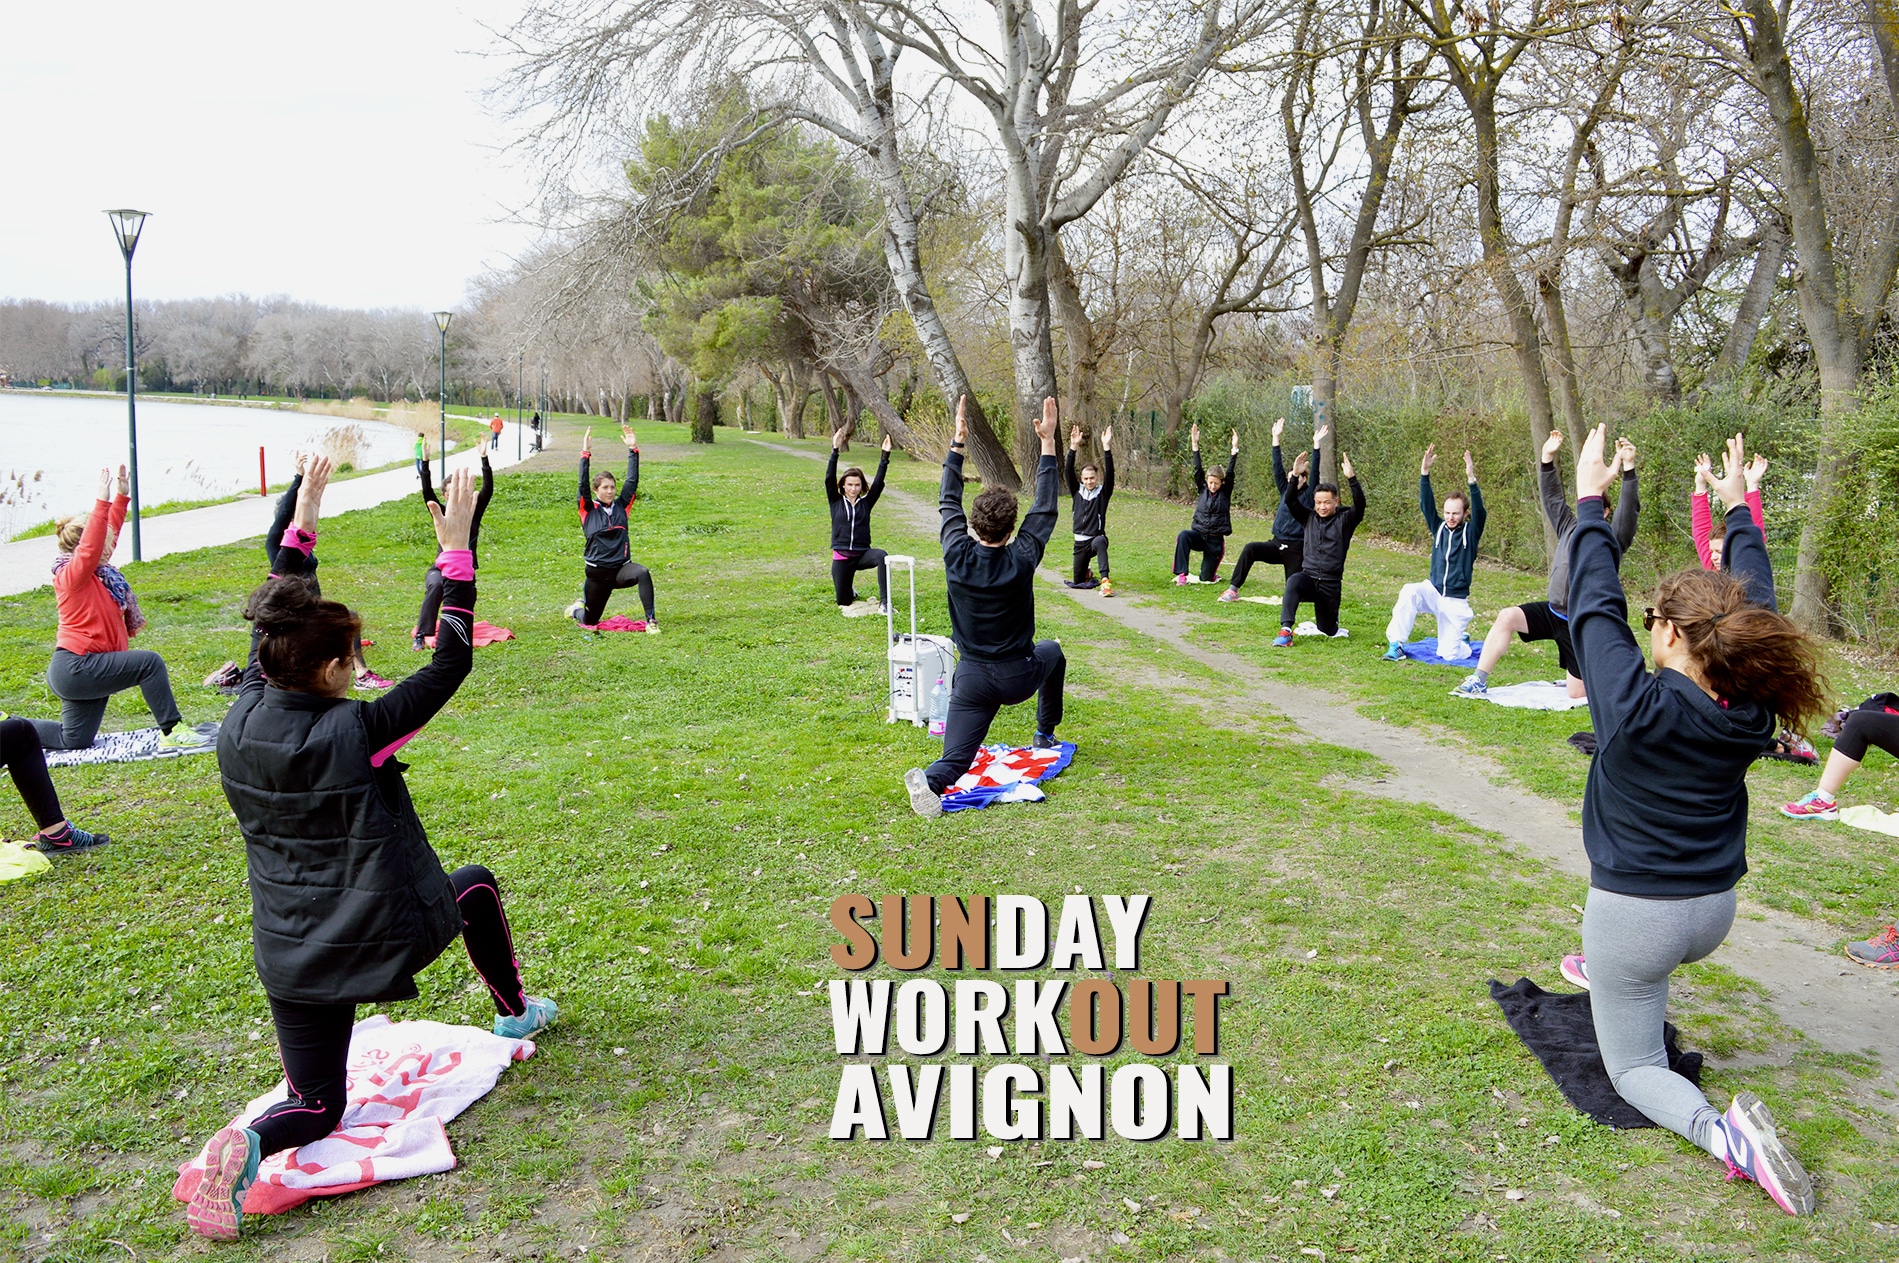 Sunday Workout Avignon 9 Coach circuit training fitness yoga pilates sport plein air evenement